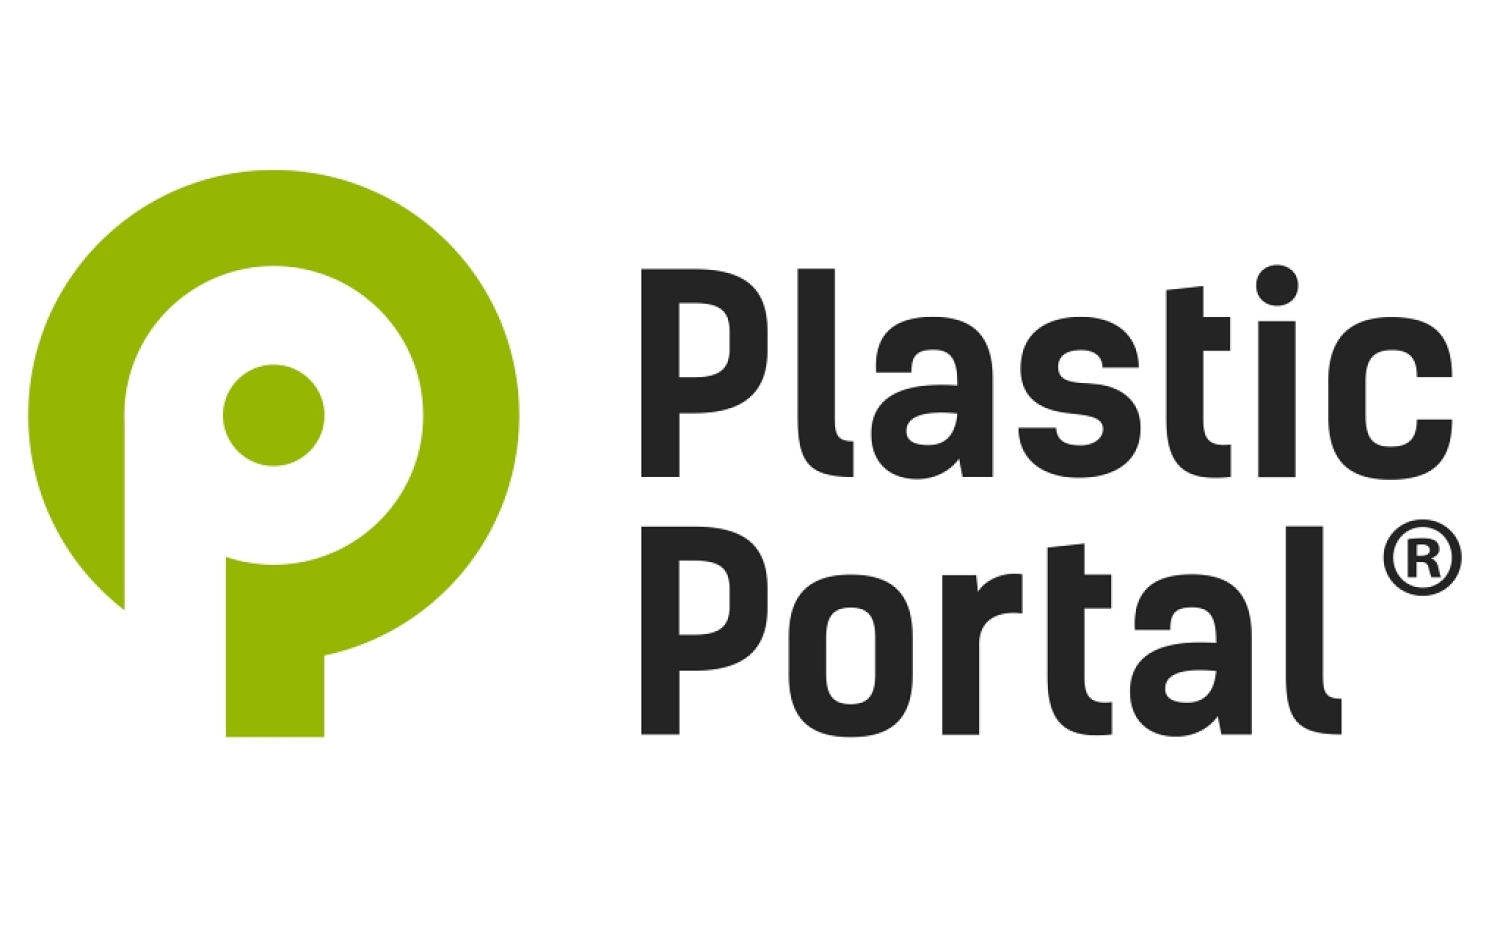 Predstavujeme nov logo PlasticPortal